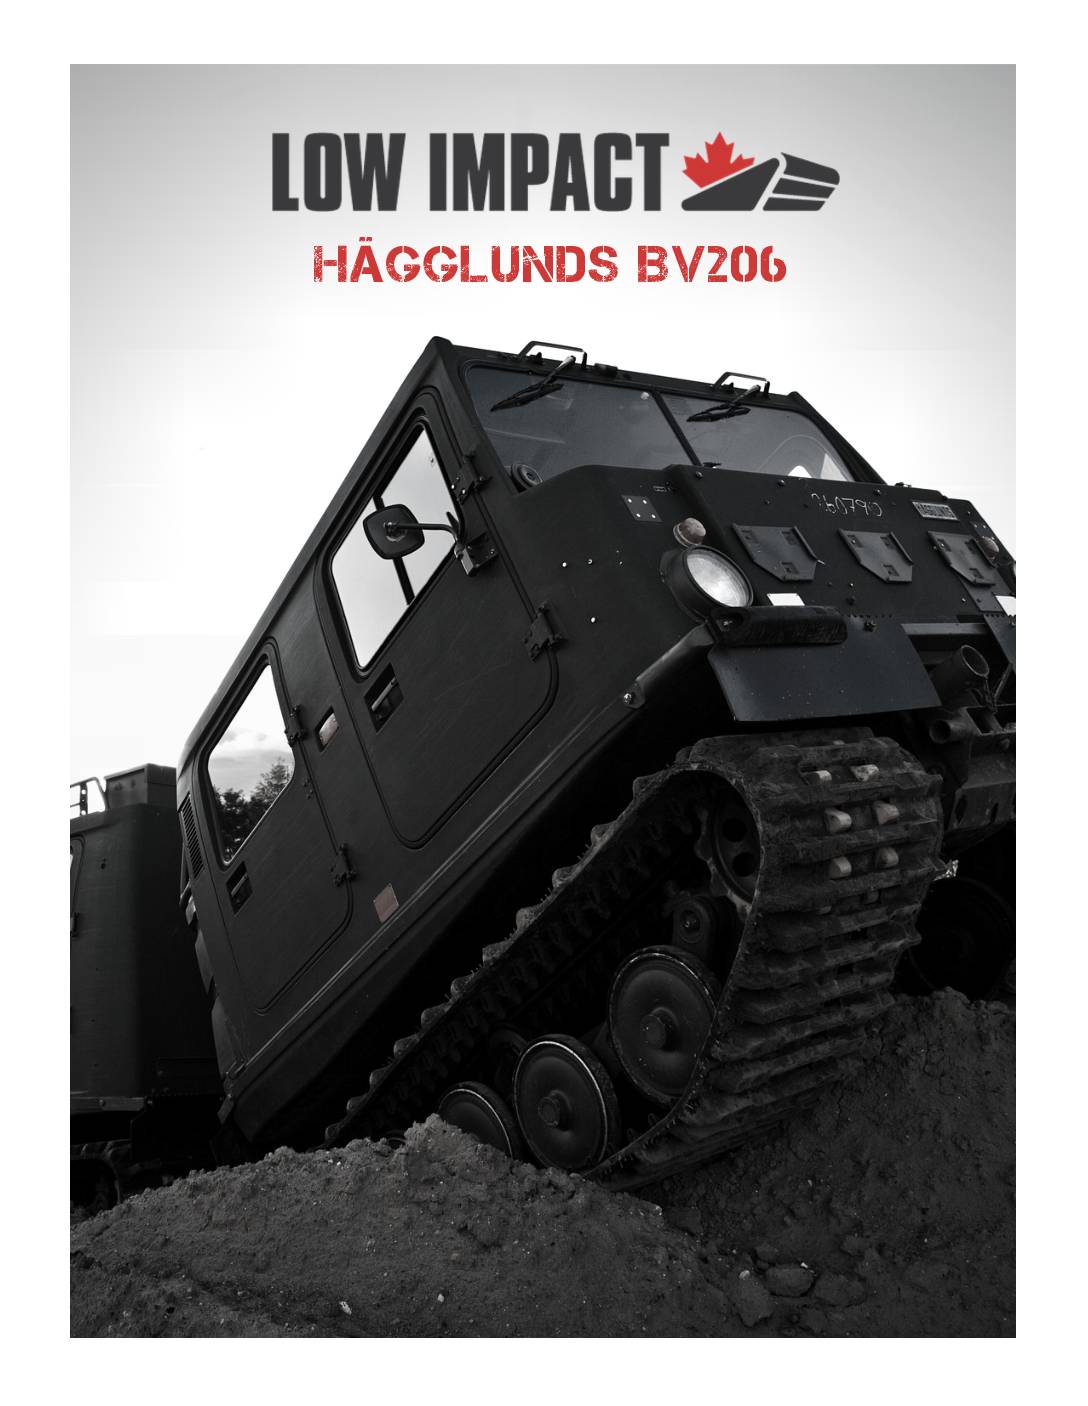 Low Impact Hagglunds BV206 Brochure